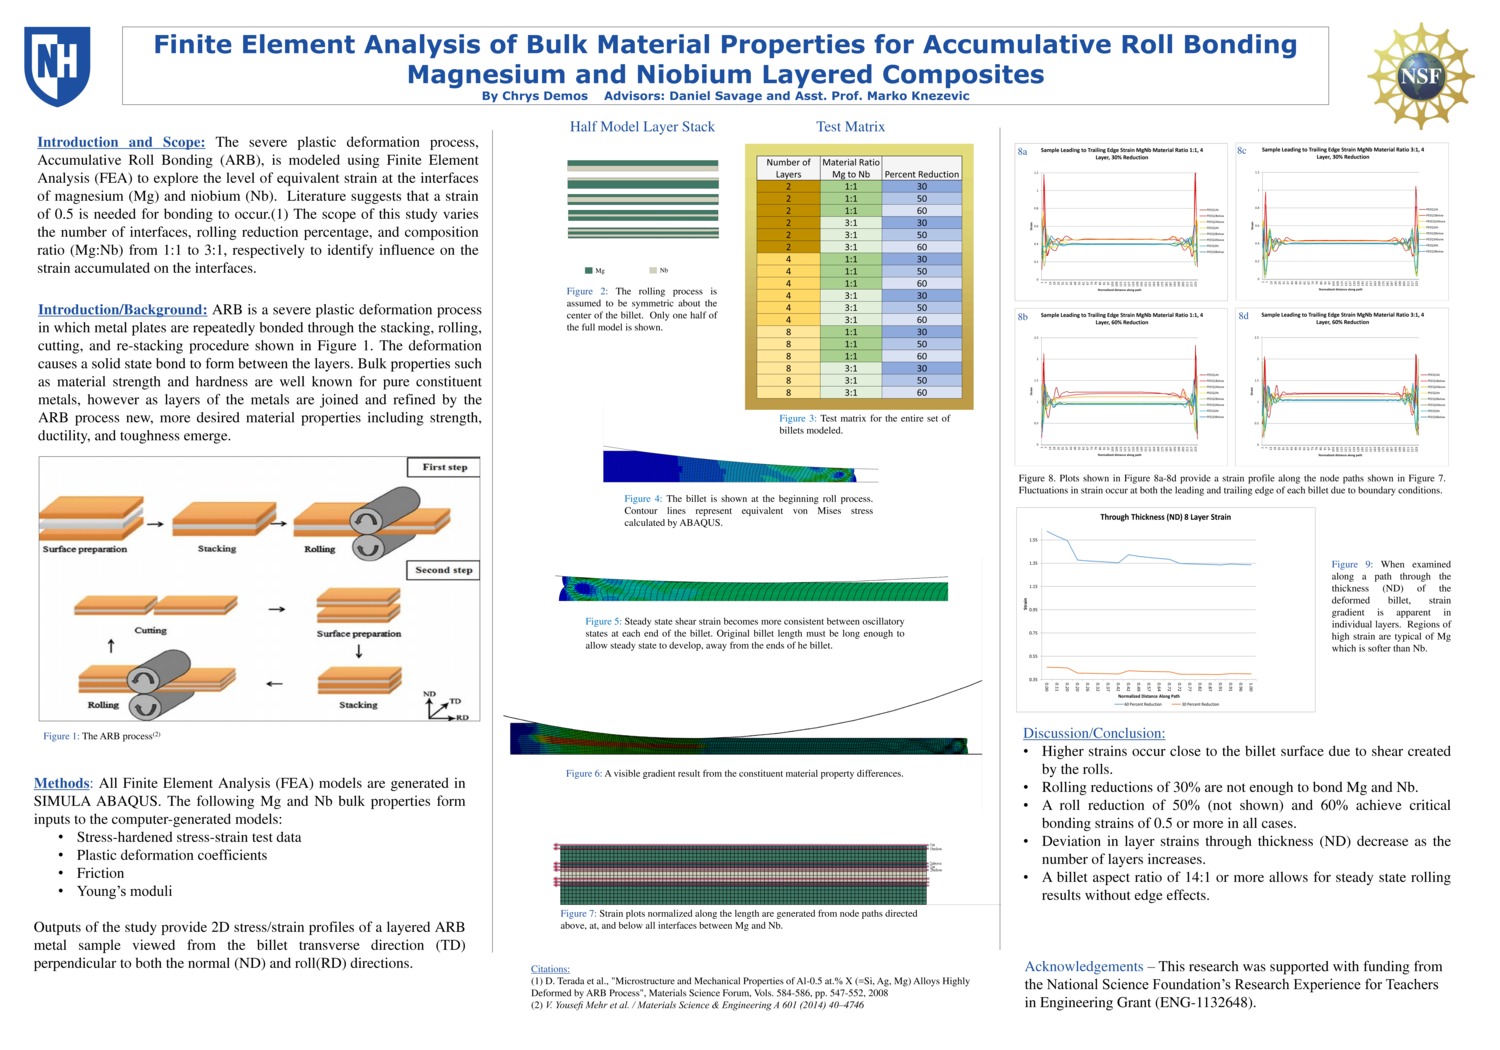 Finite Element Analysis Of Bulk Material Properties For Accumulative Roll Bonding Magnesium And Niobium Metal Matrix Composites by kitdemos